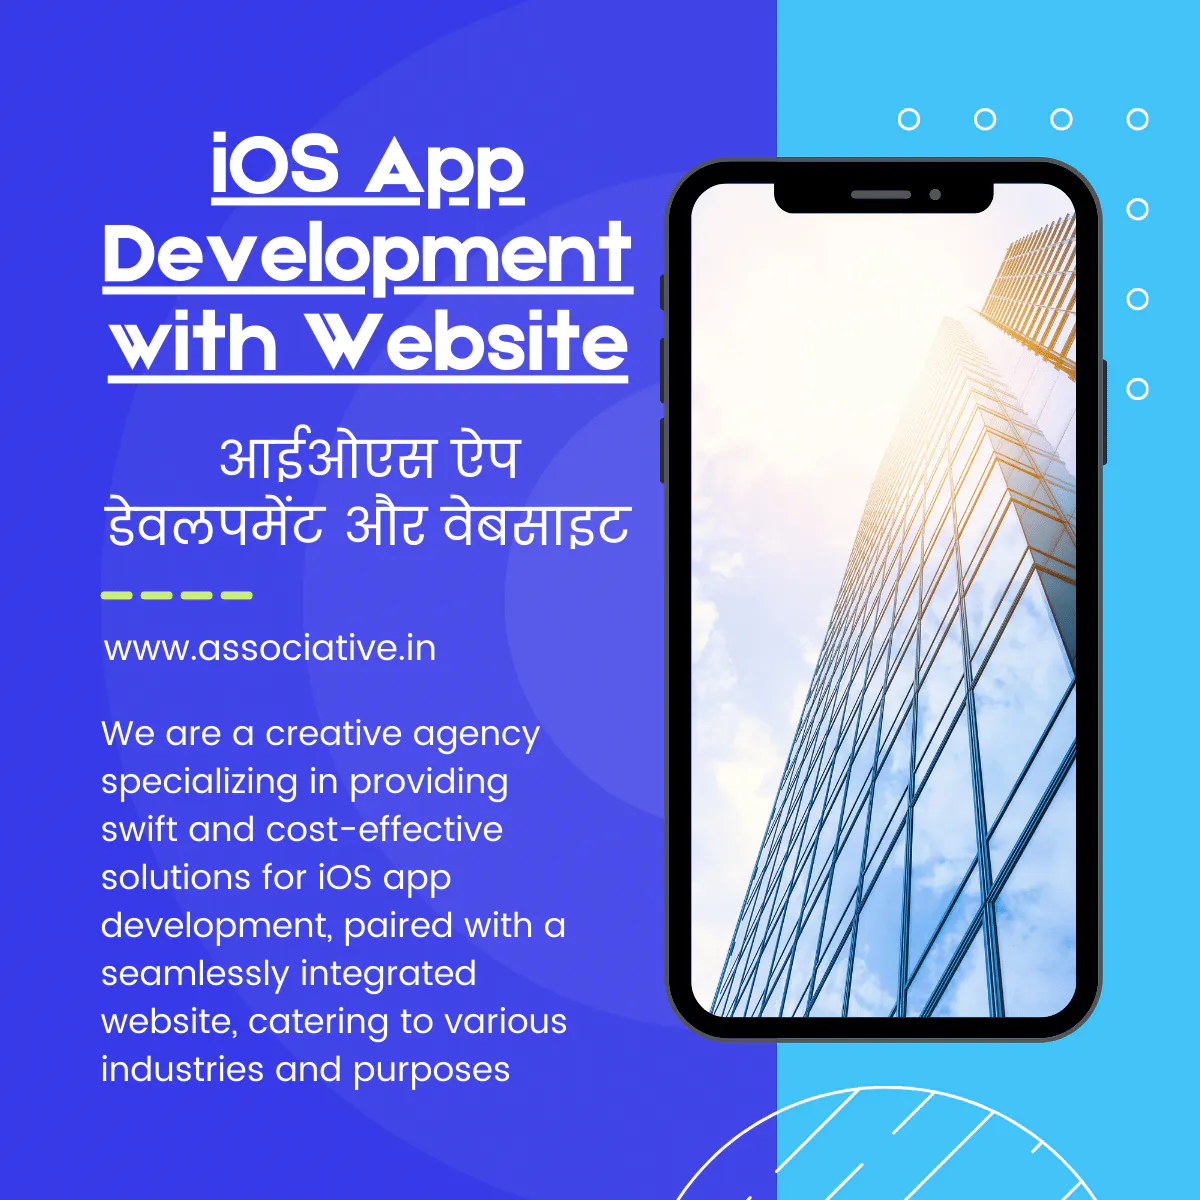 iOS App Development with Website